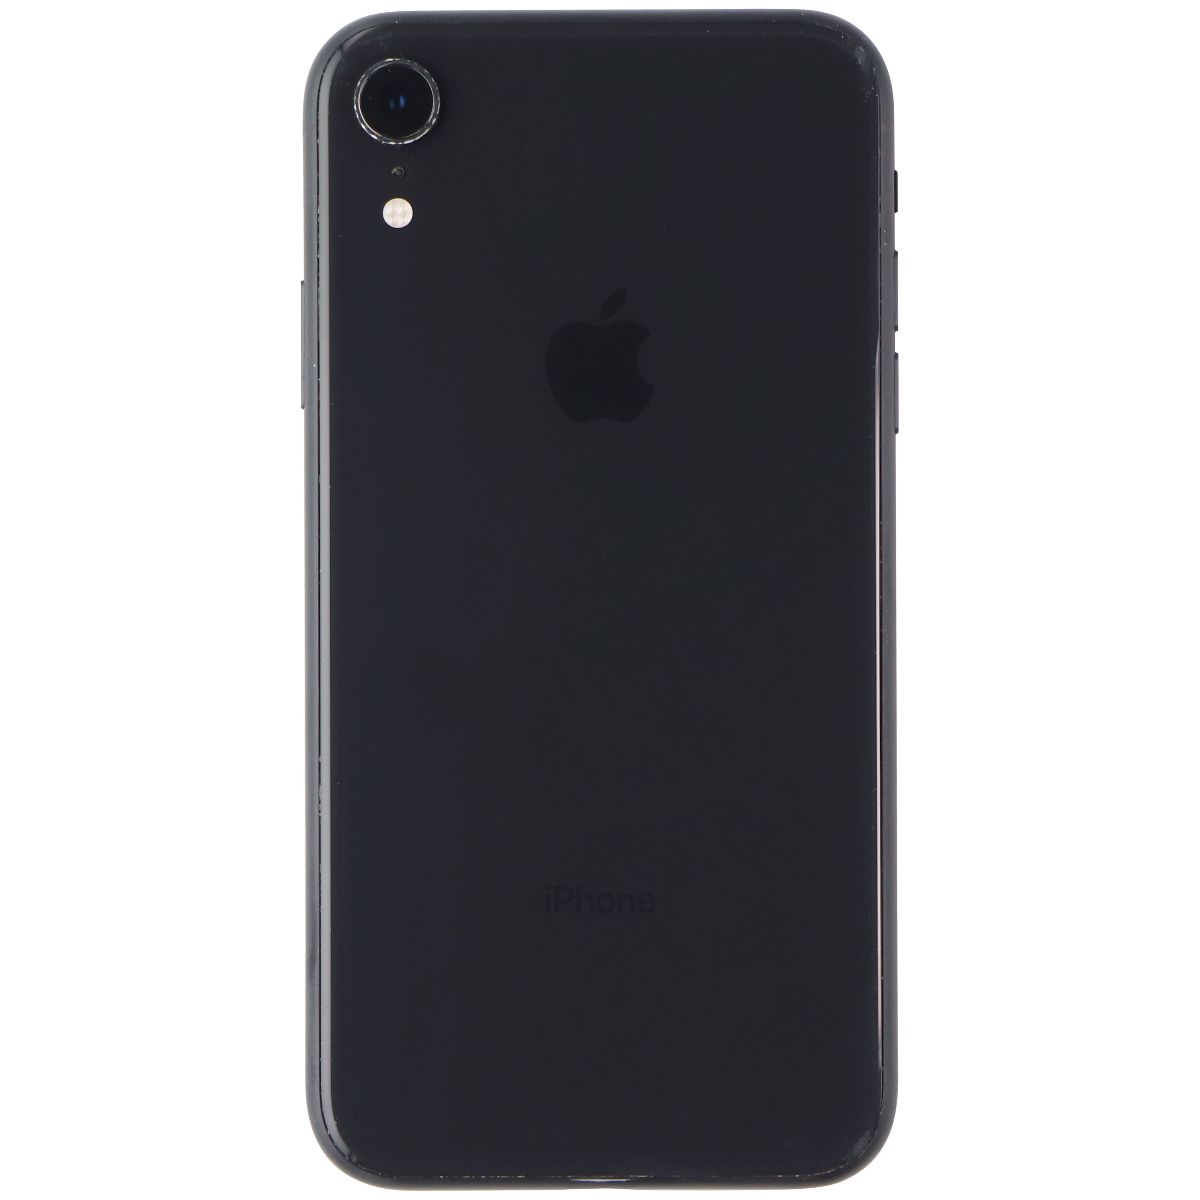 Apple iPhone XR (6.1-inch) Smartphone (A2105) Unlocked - 256GB / Black